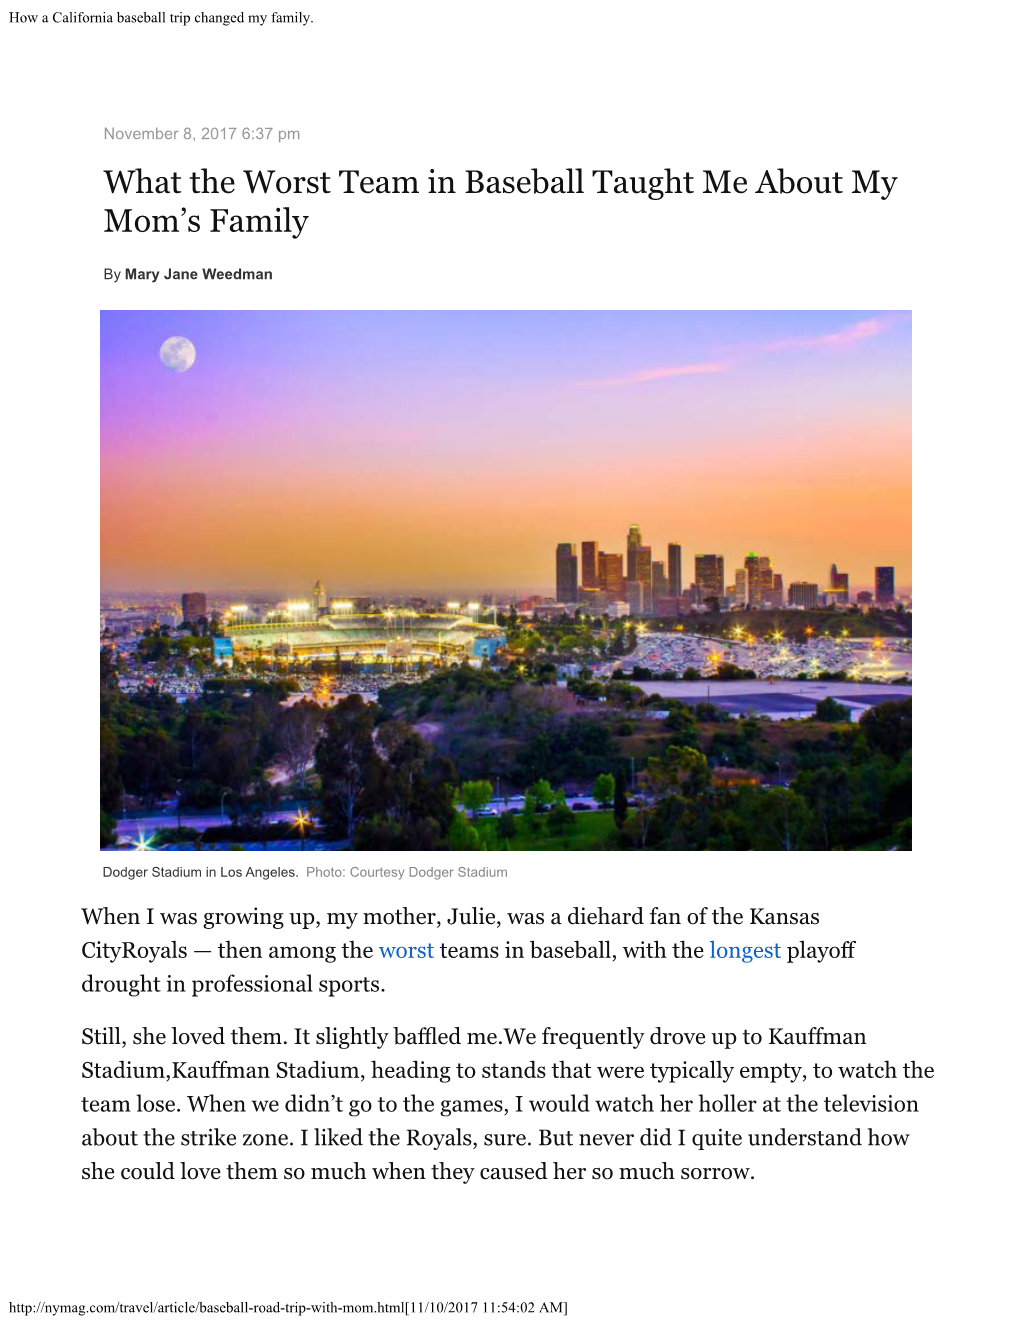 How a California Baseball Trip Changed My Family